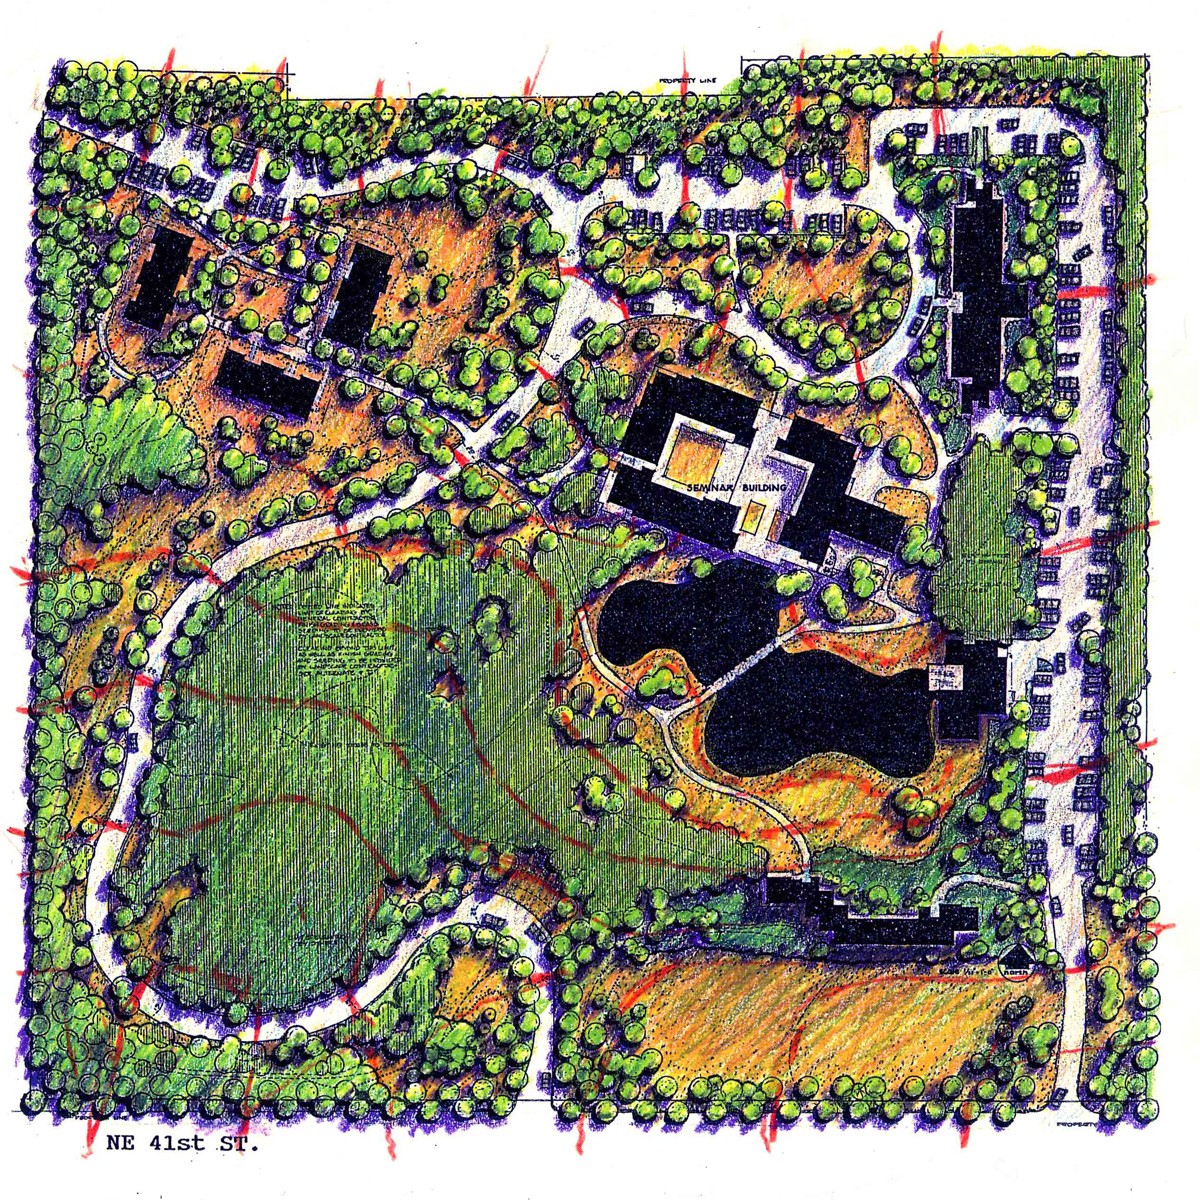 Battelle Memorial Institute Master Plan, 1992